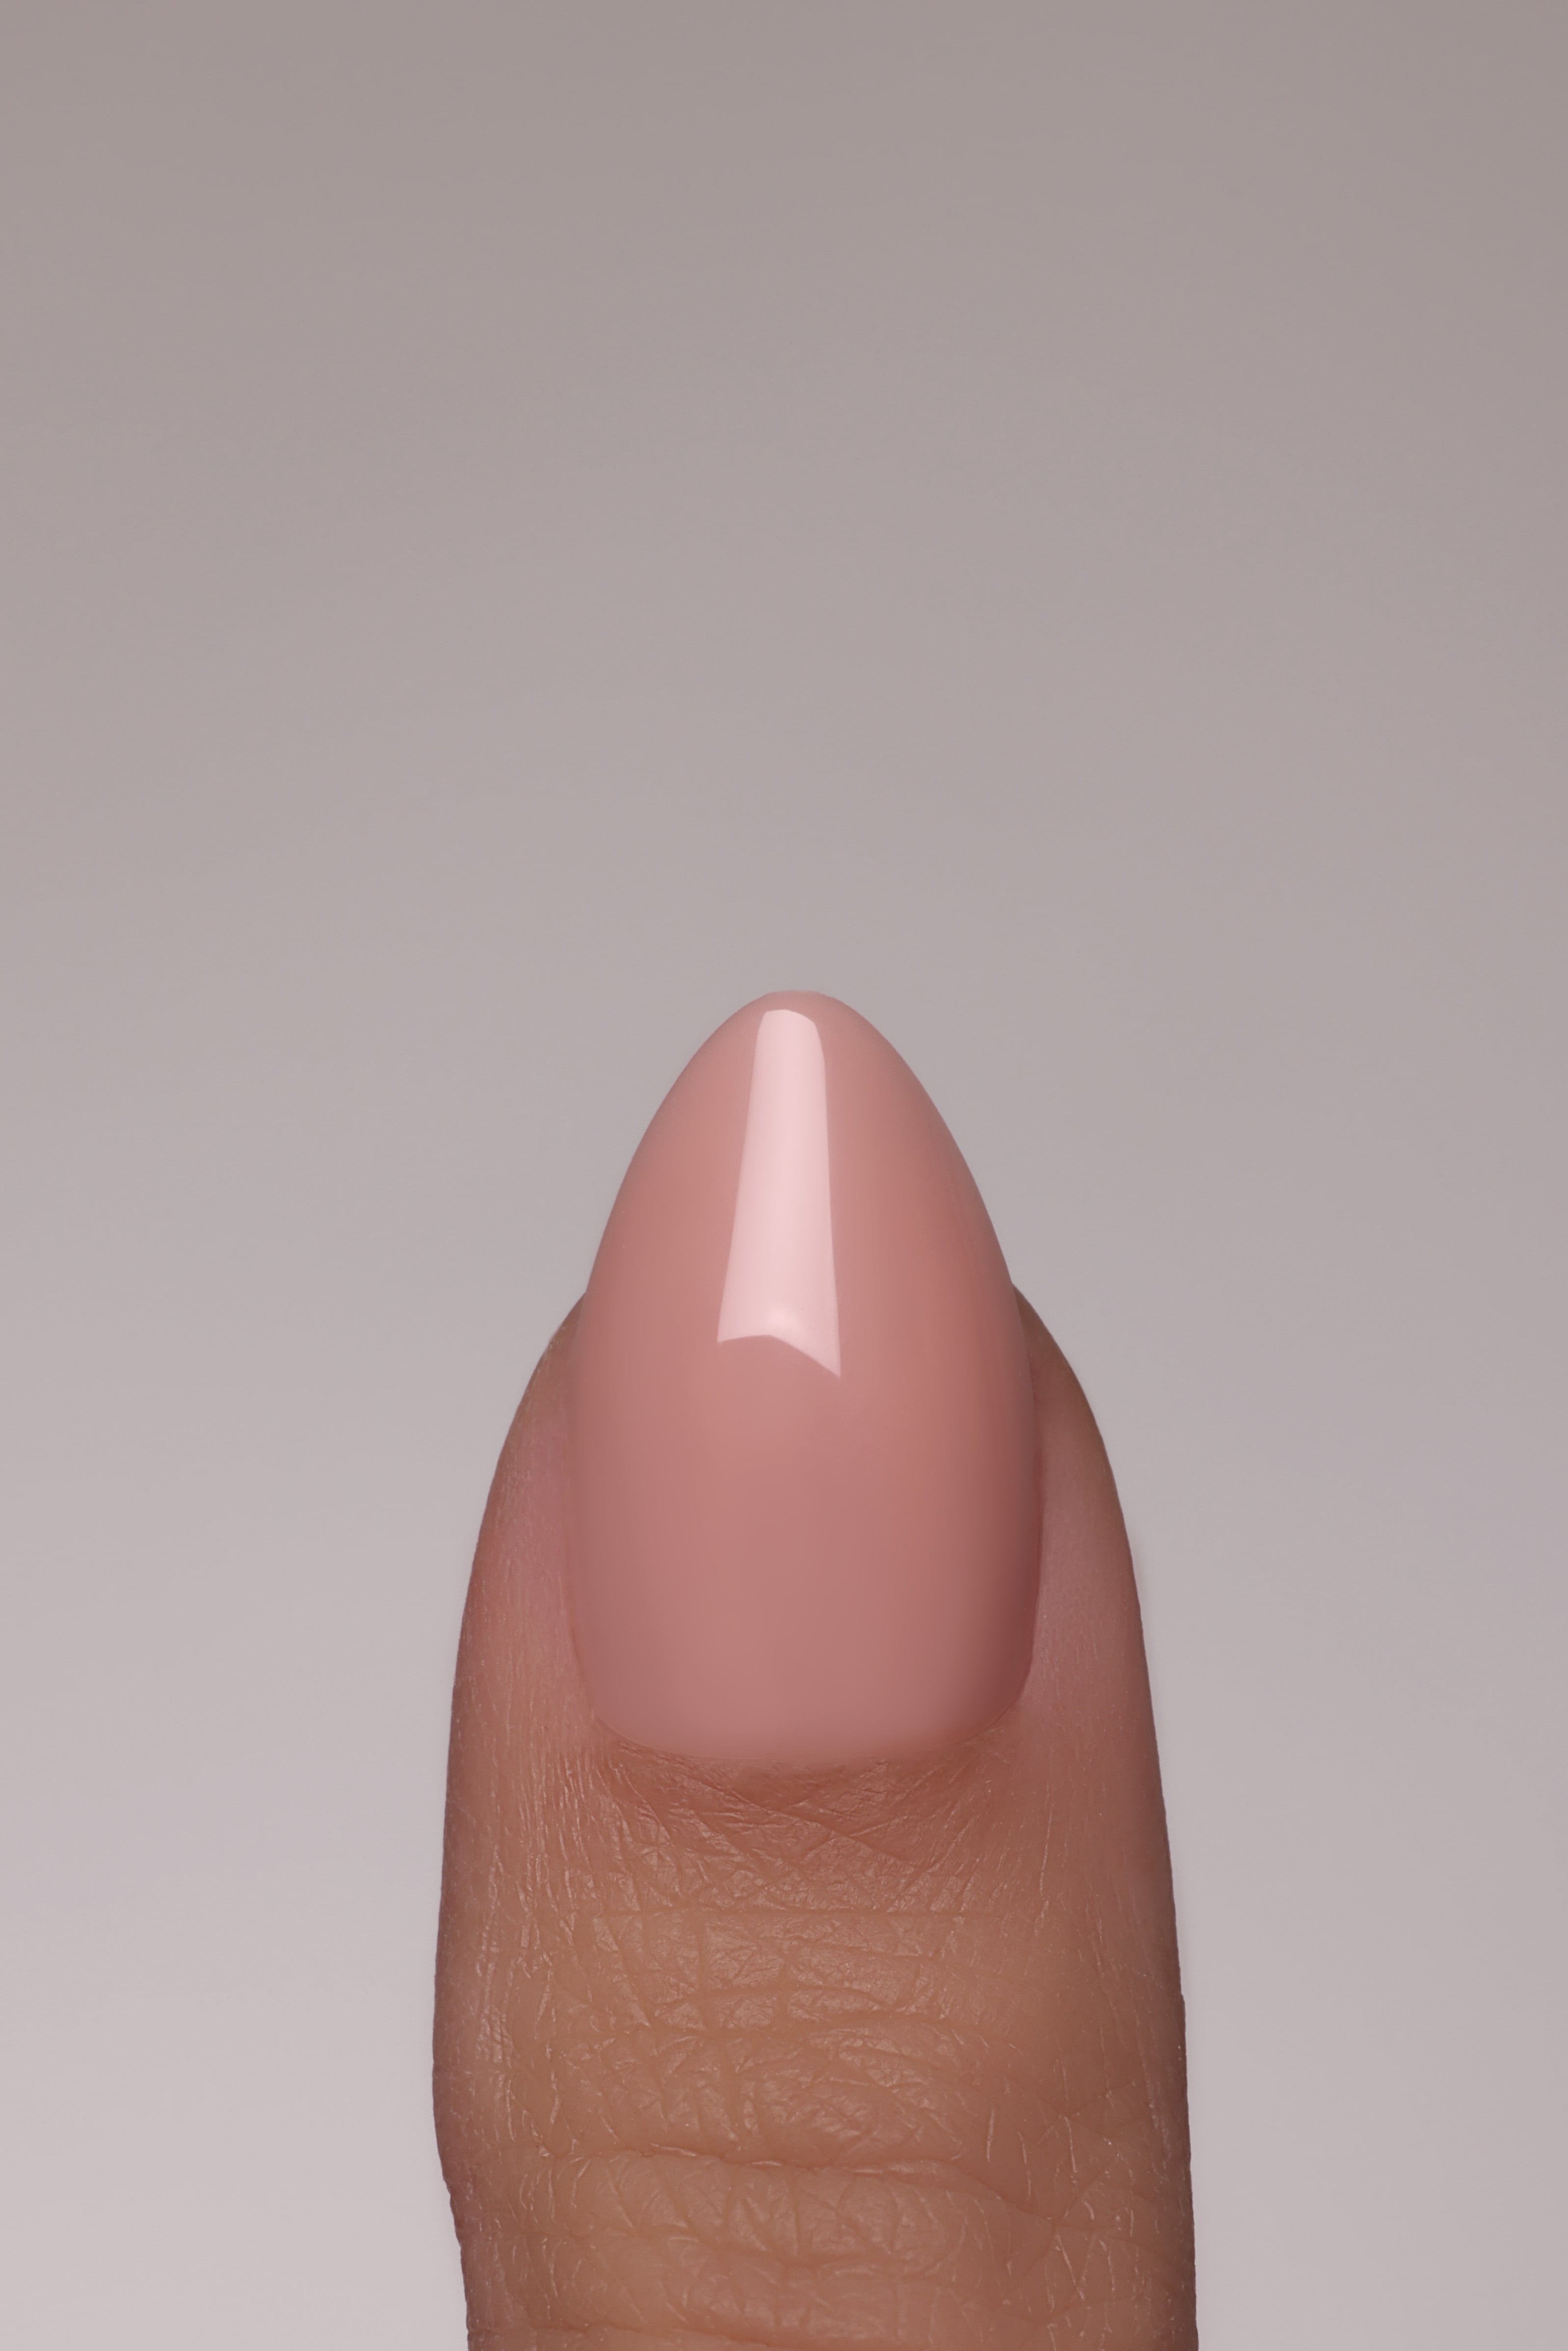 BESTIE FRENCH Acrylish (ekstra uzun) Press on Nails